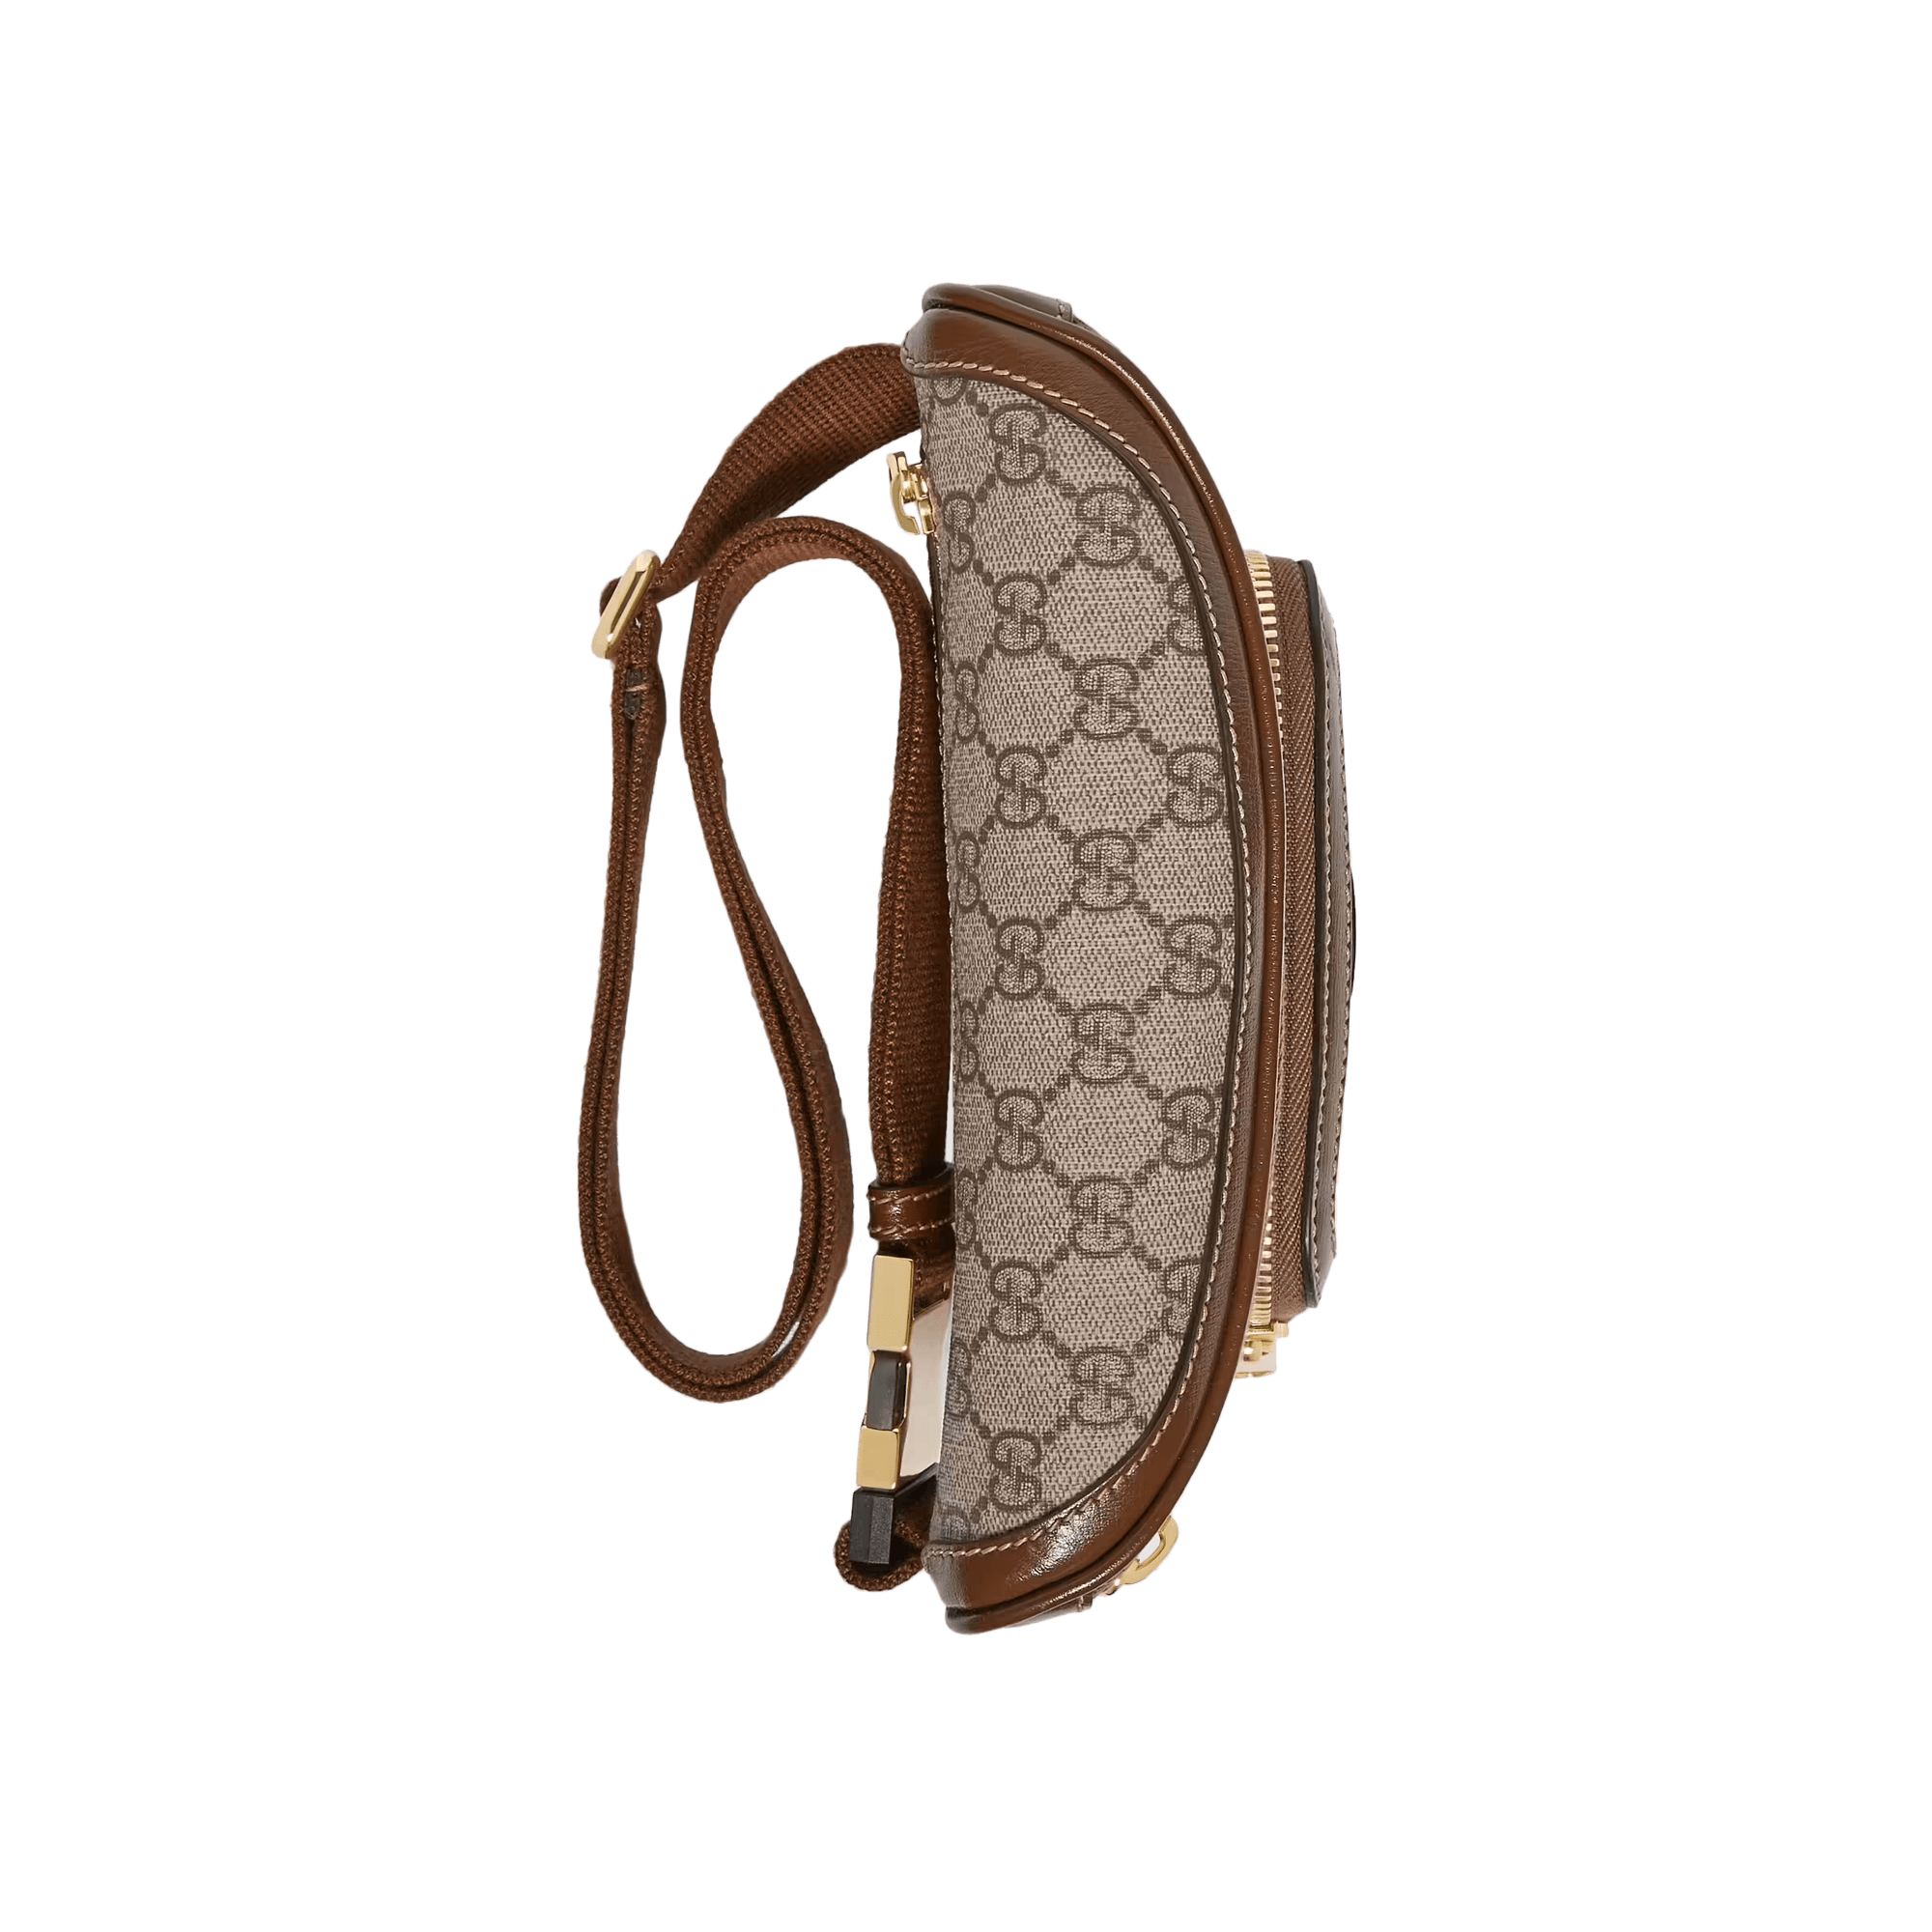 Belt bag with Interlocking G